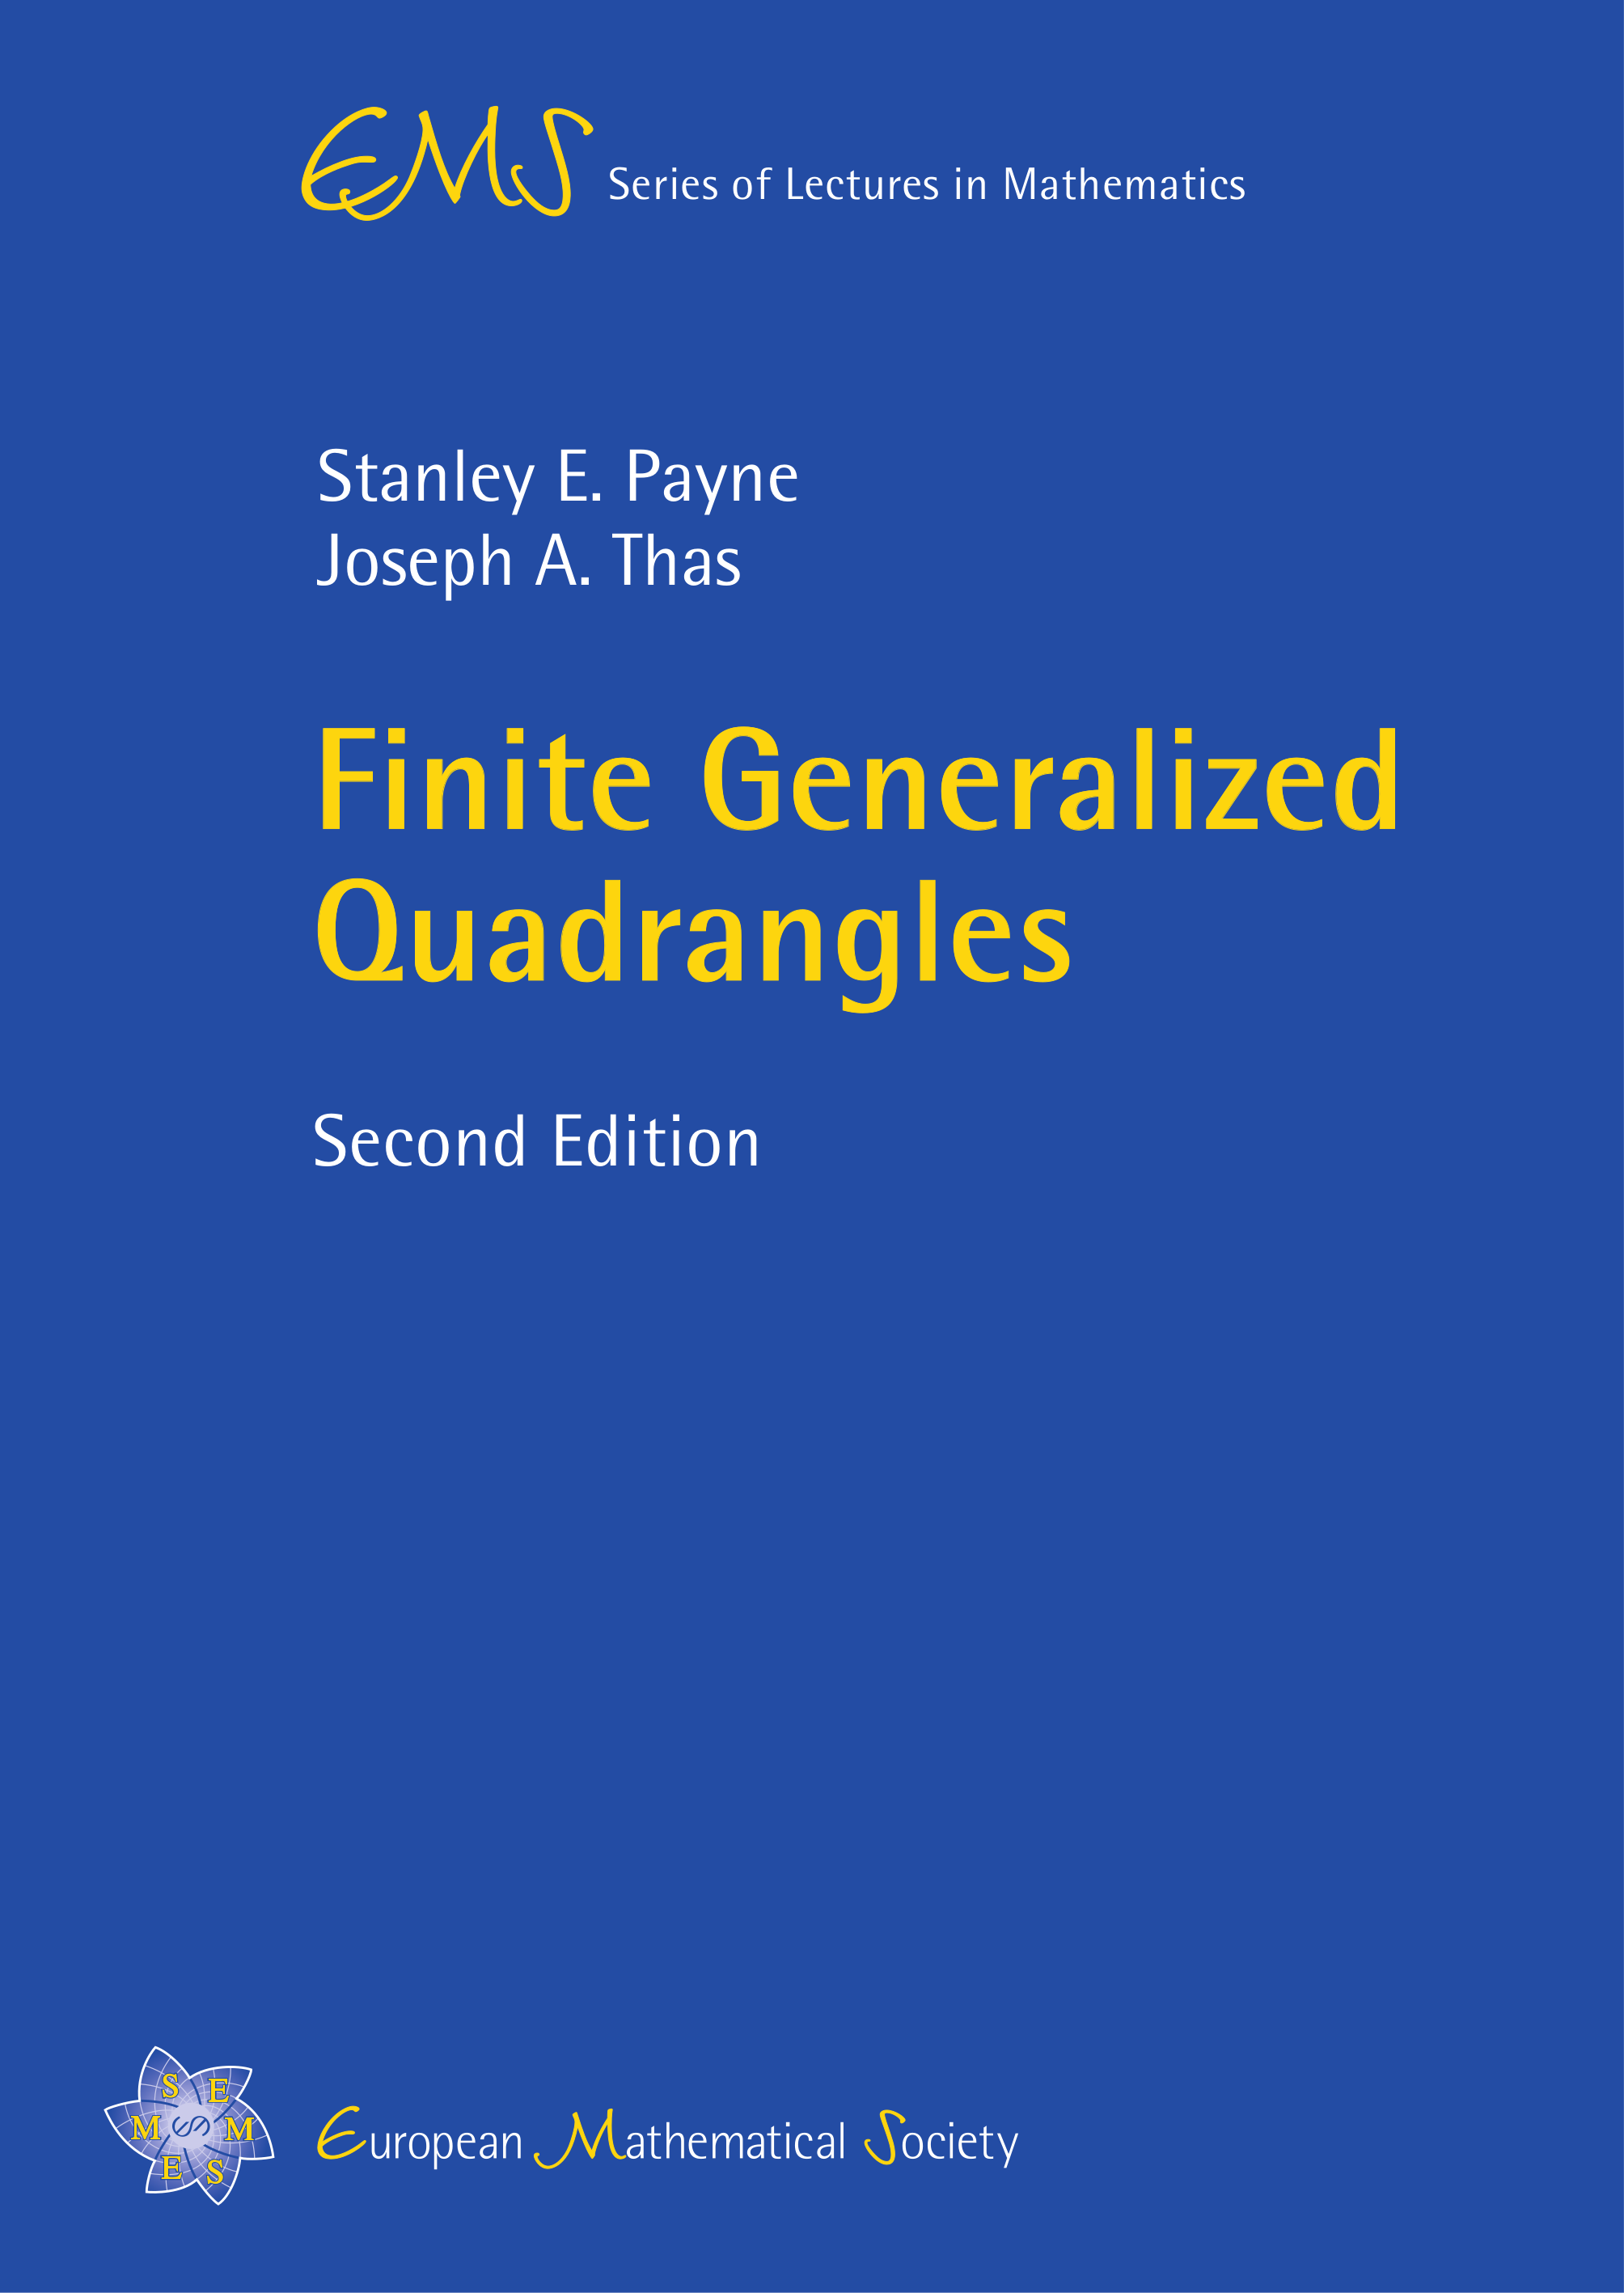 Generalized quadrangles in finite affine spaces cover